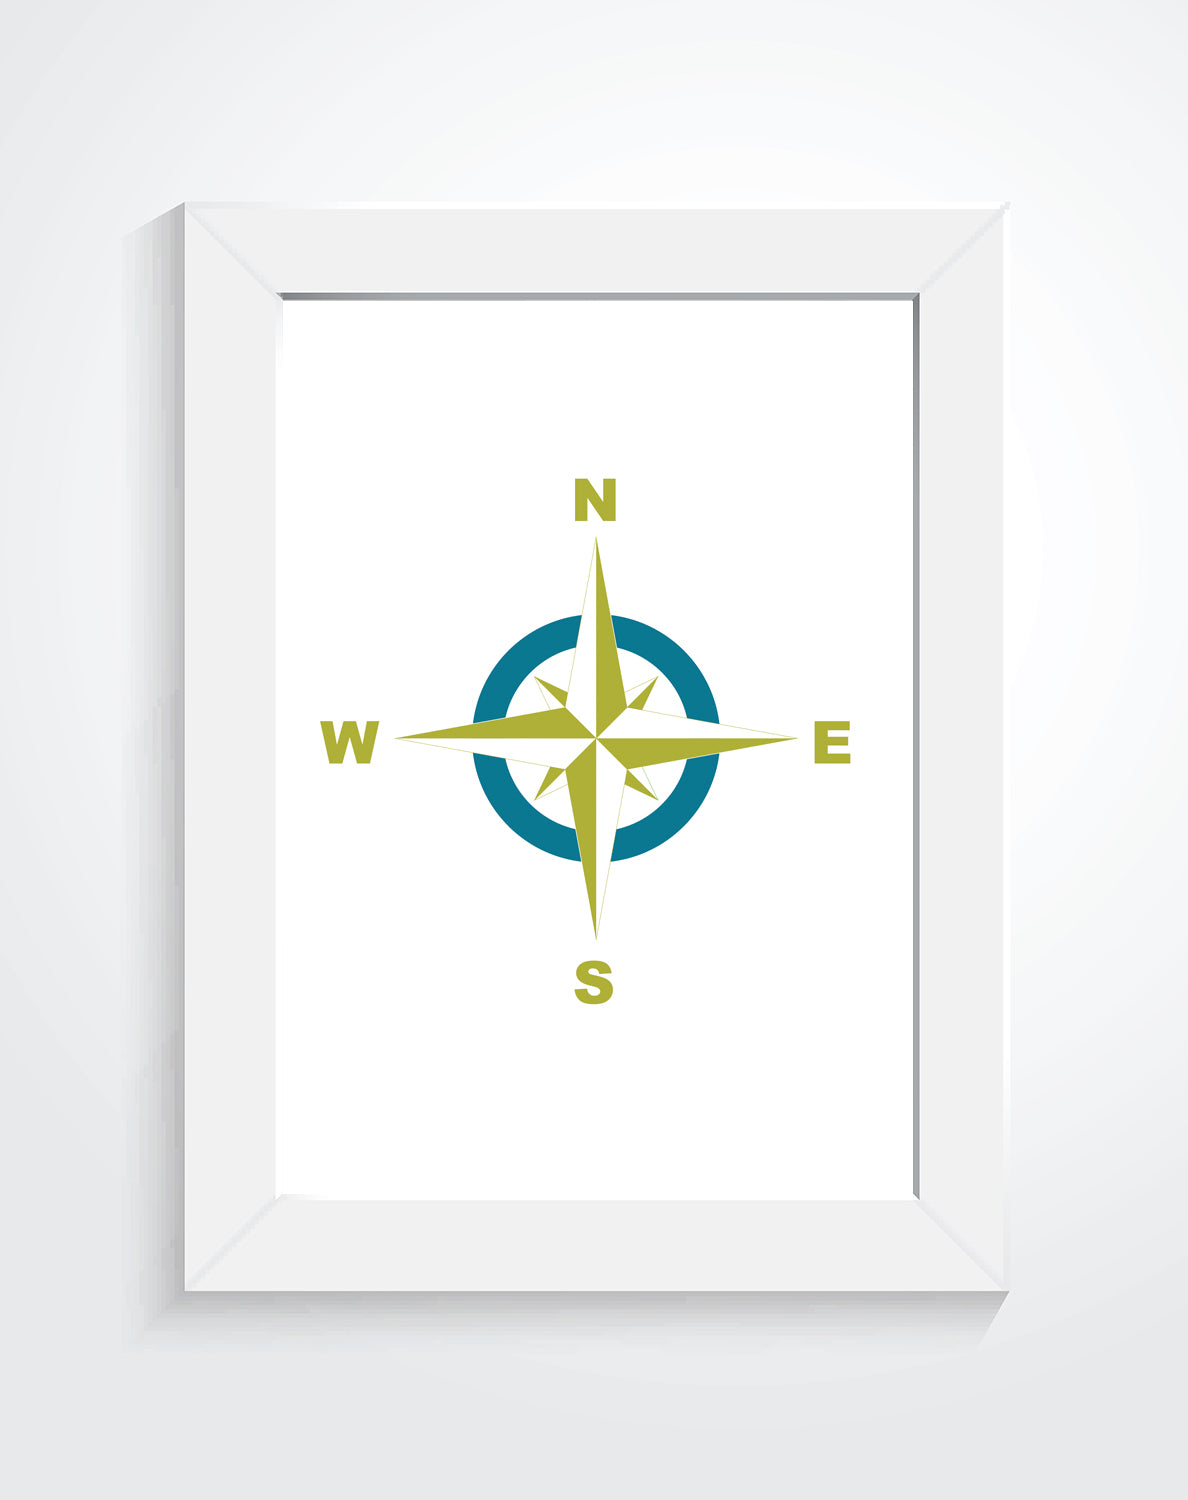 A compass rose art design in a white frame.